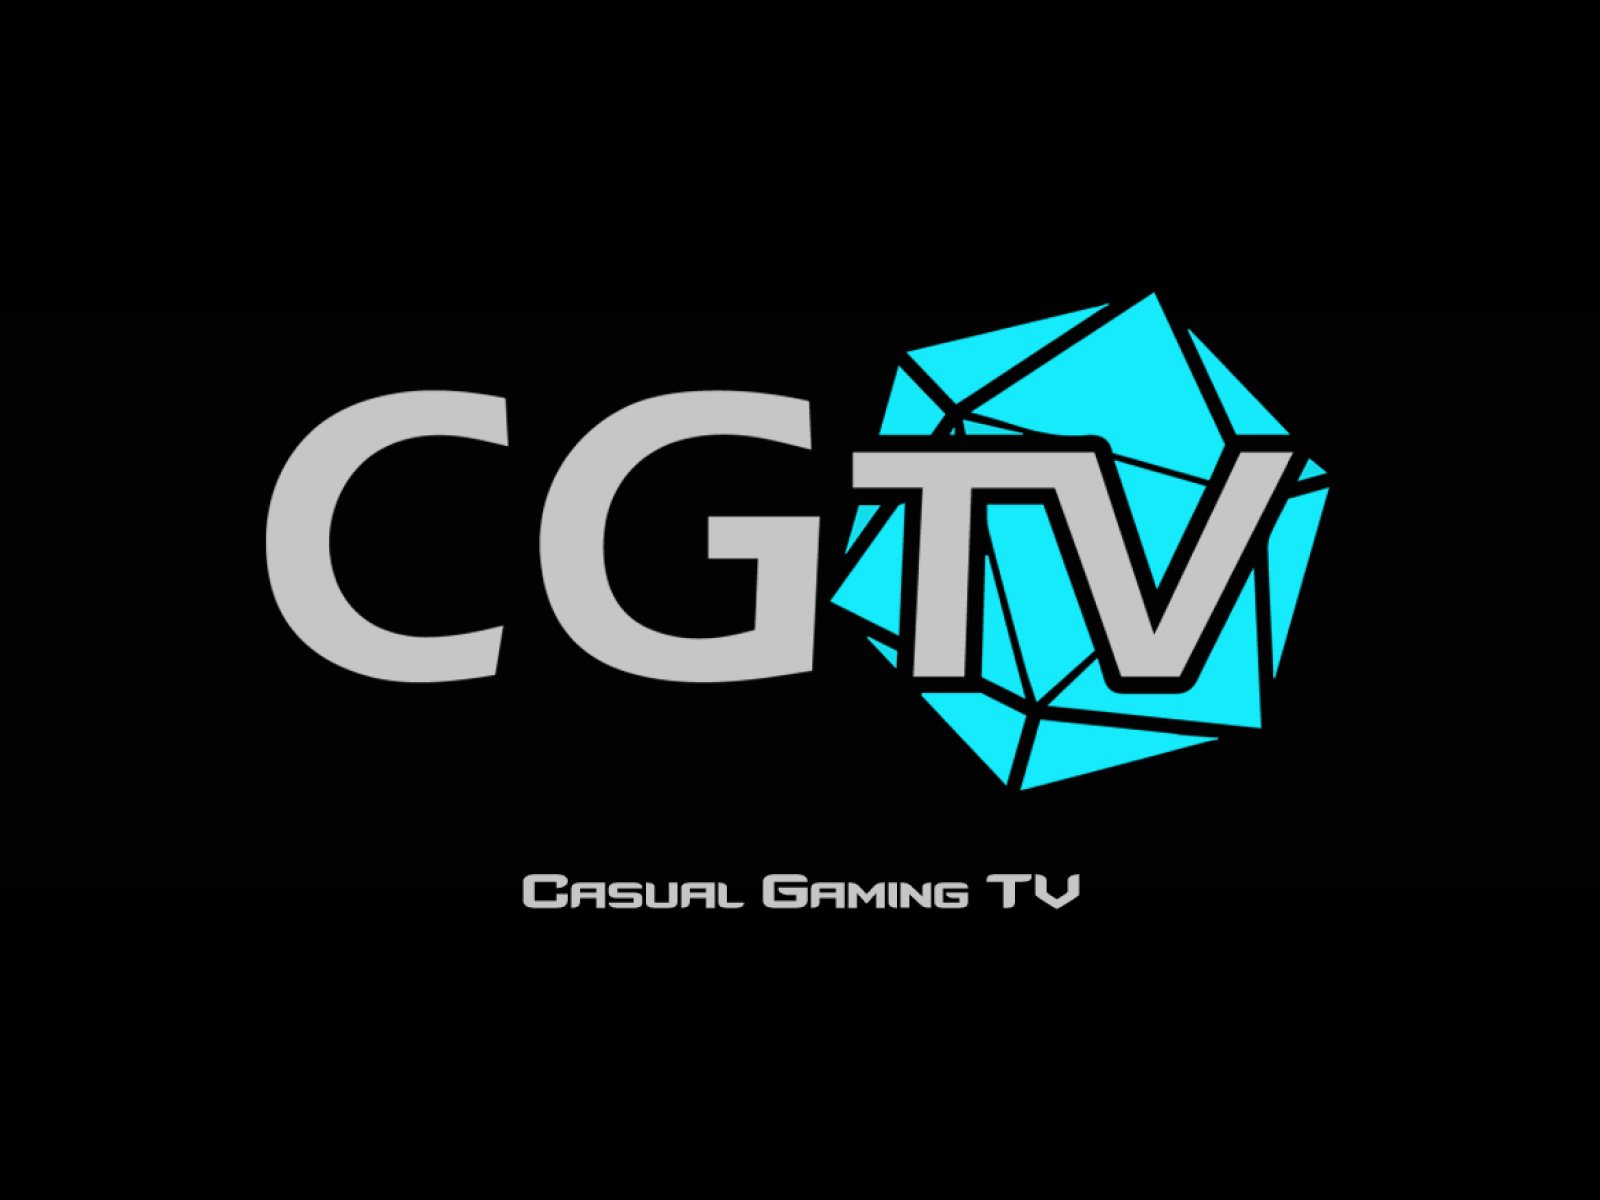 CGTV Logo by Dan Lanza on Dribbble